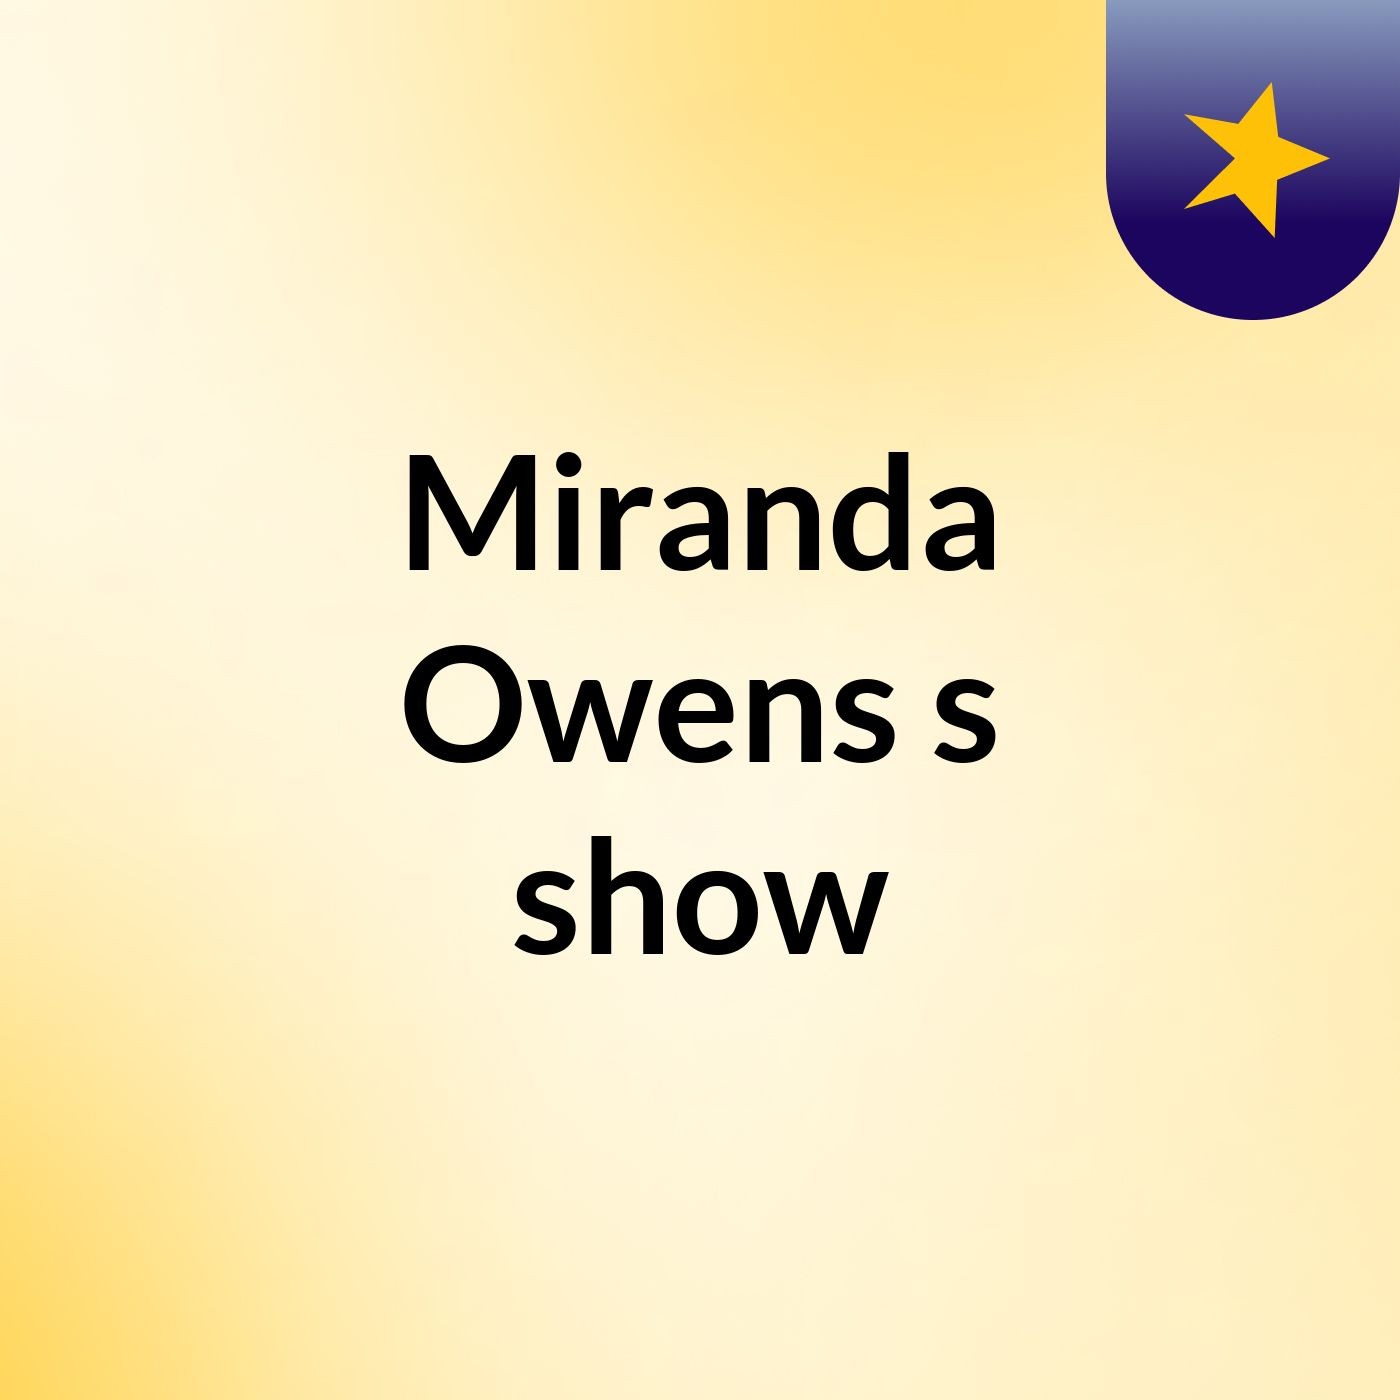 Miranda Owens's show